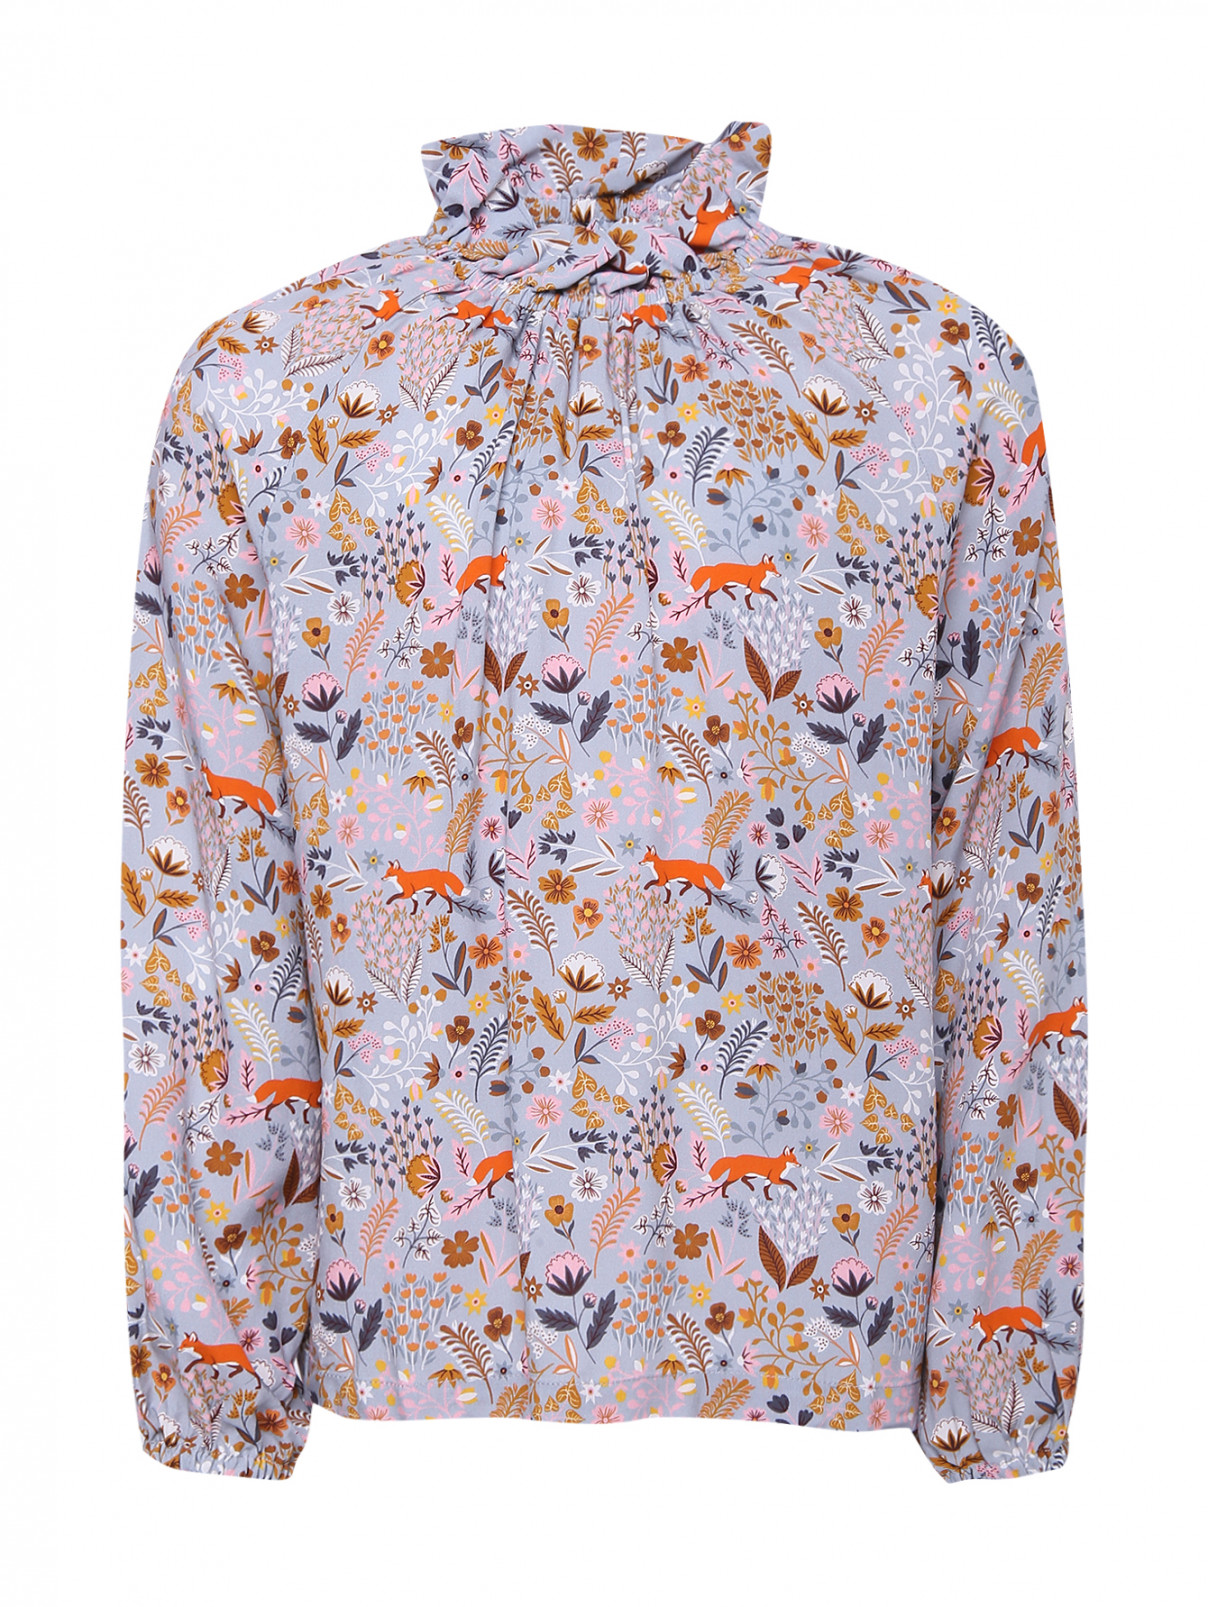 Блуза из вискозы с рукавом-реглан Il Gufo  –  Общий вид  – Цвет:  Узор